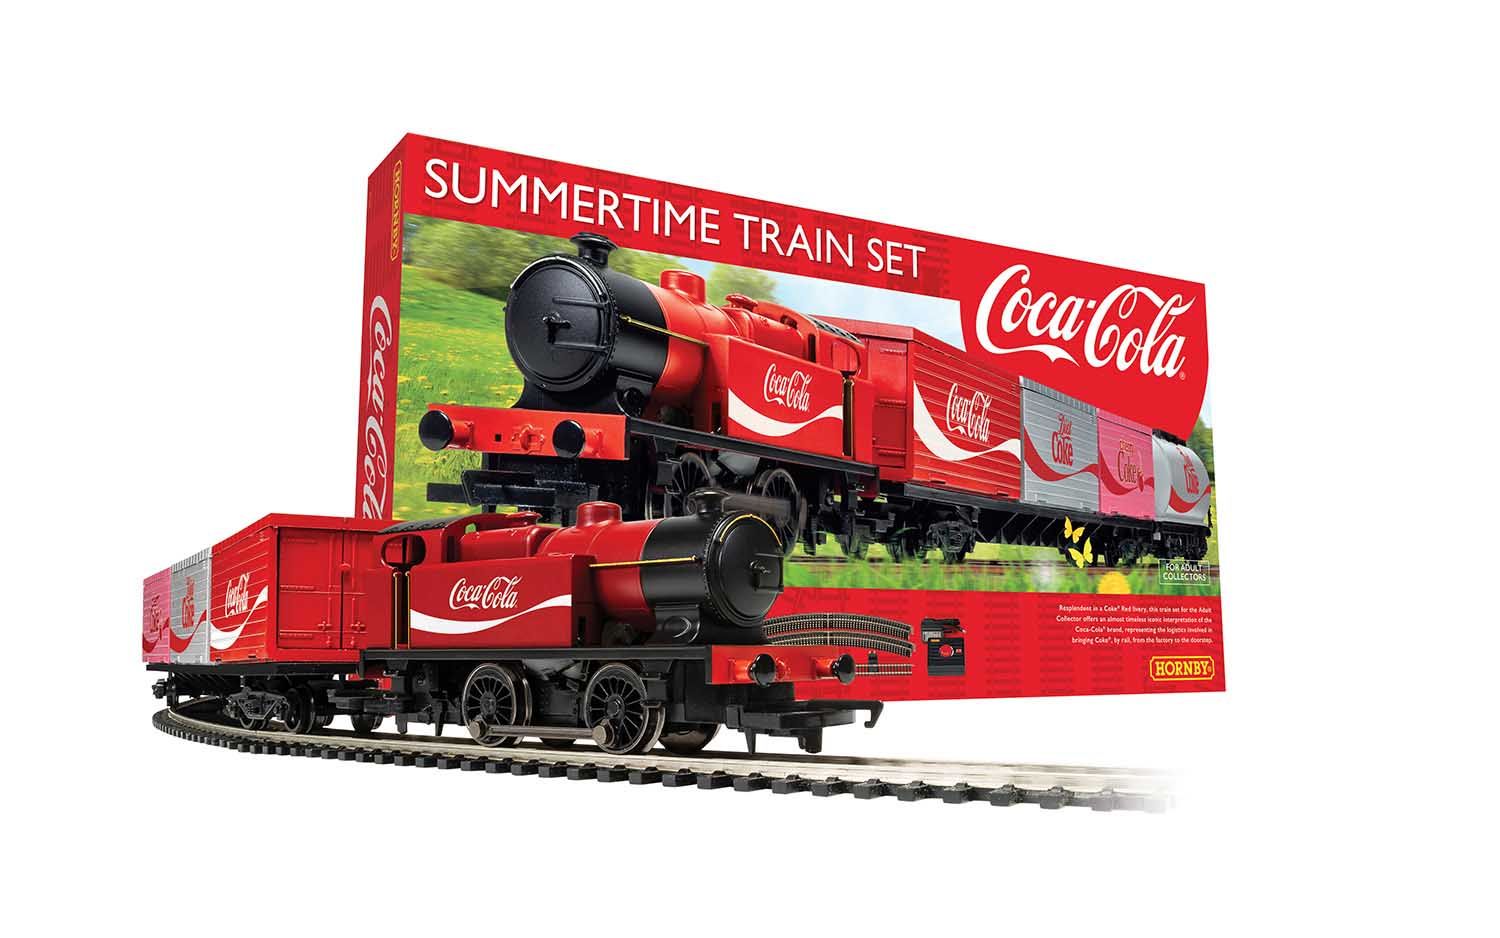  Summertime Coca-Cola Train Set